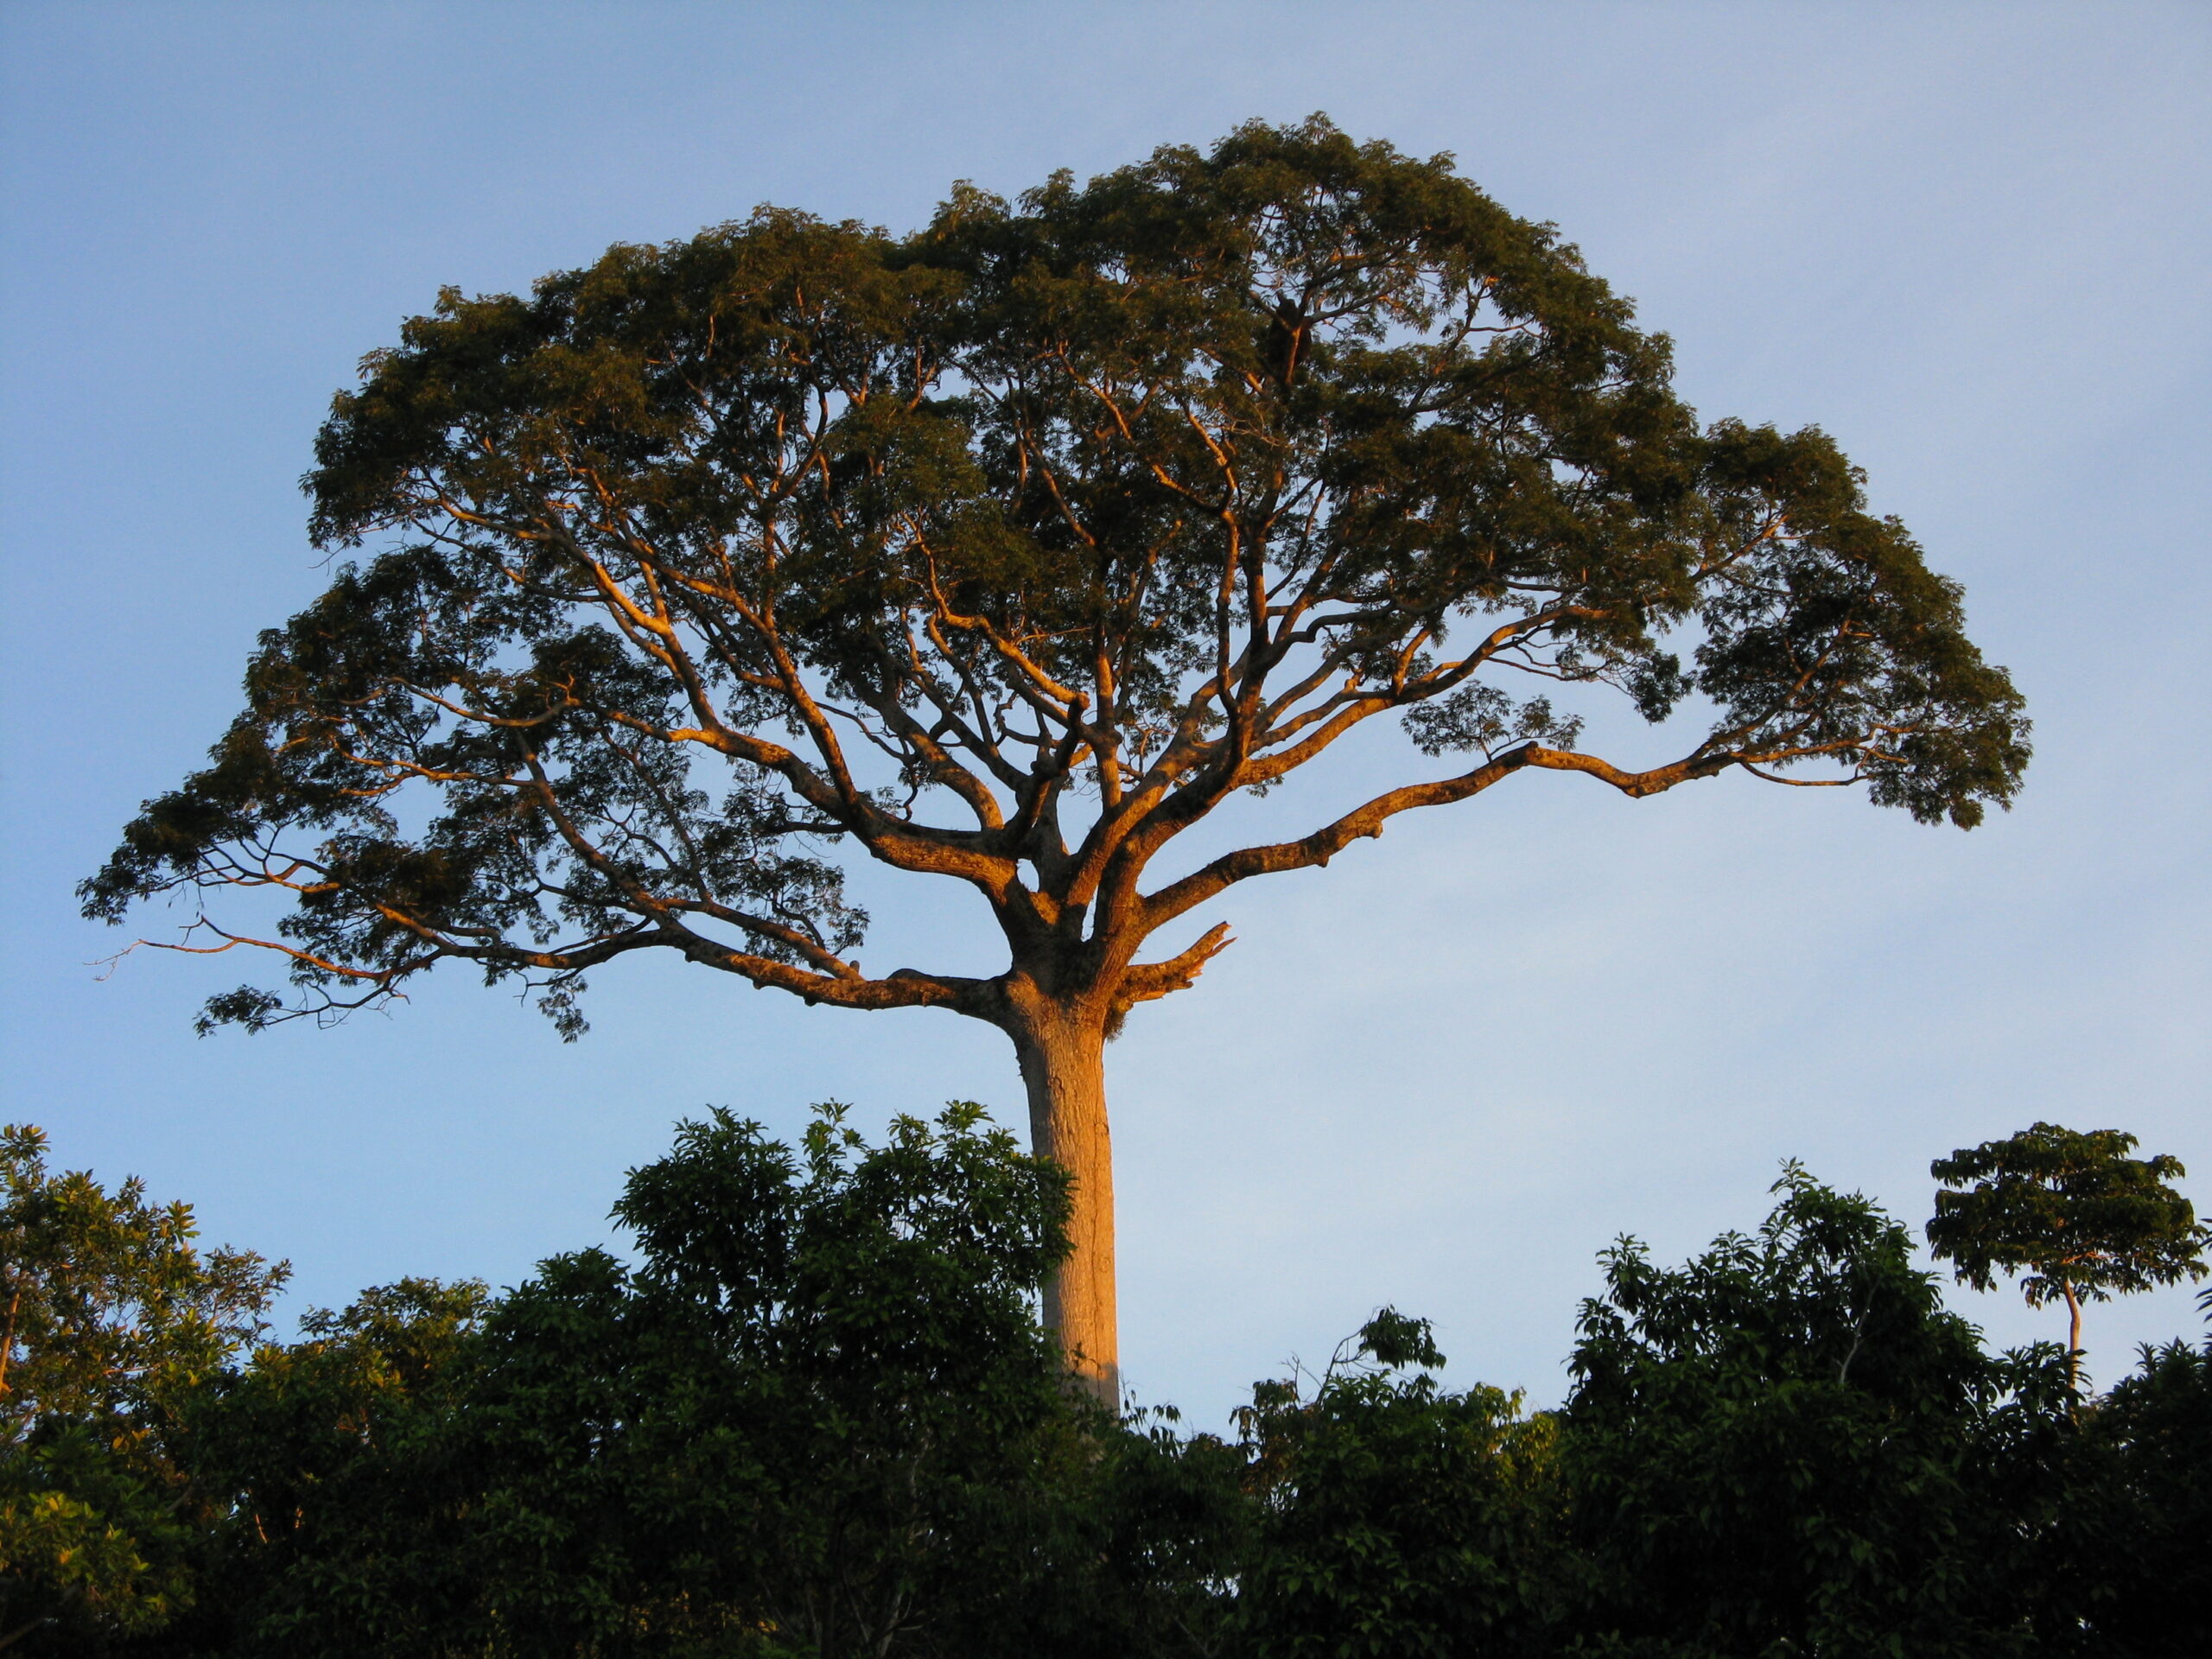 The Ceiba tree at Tirimbina 